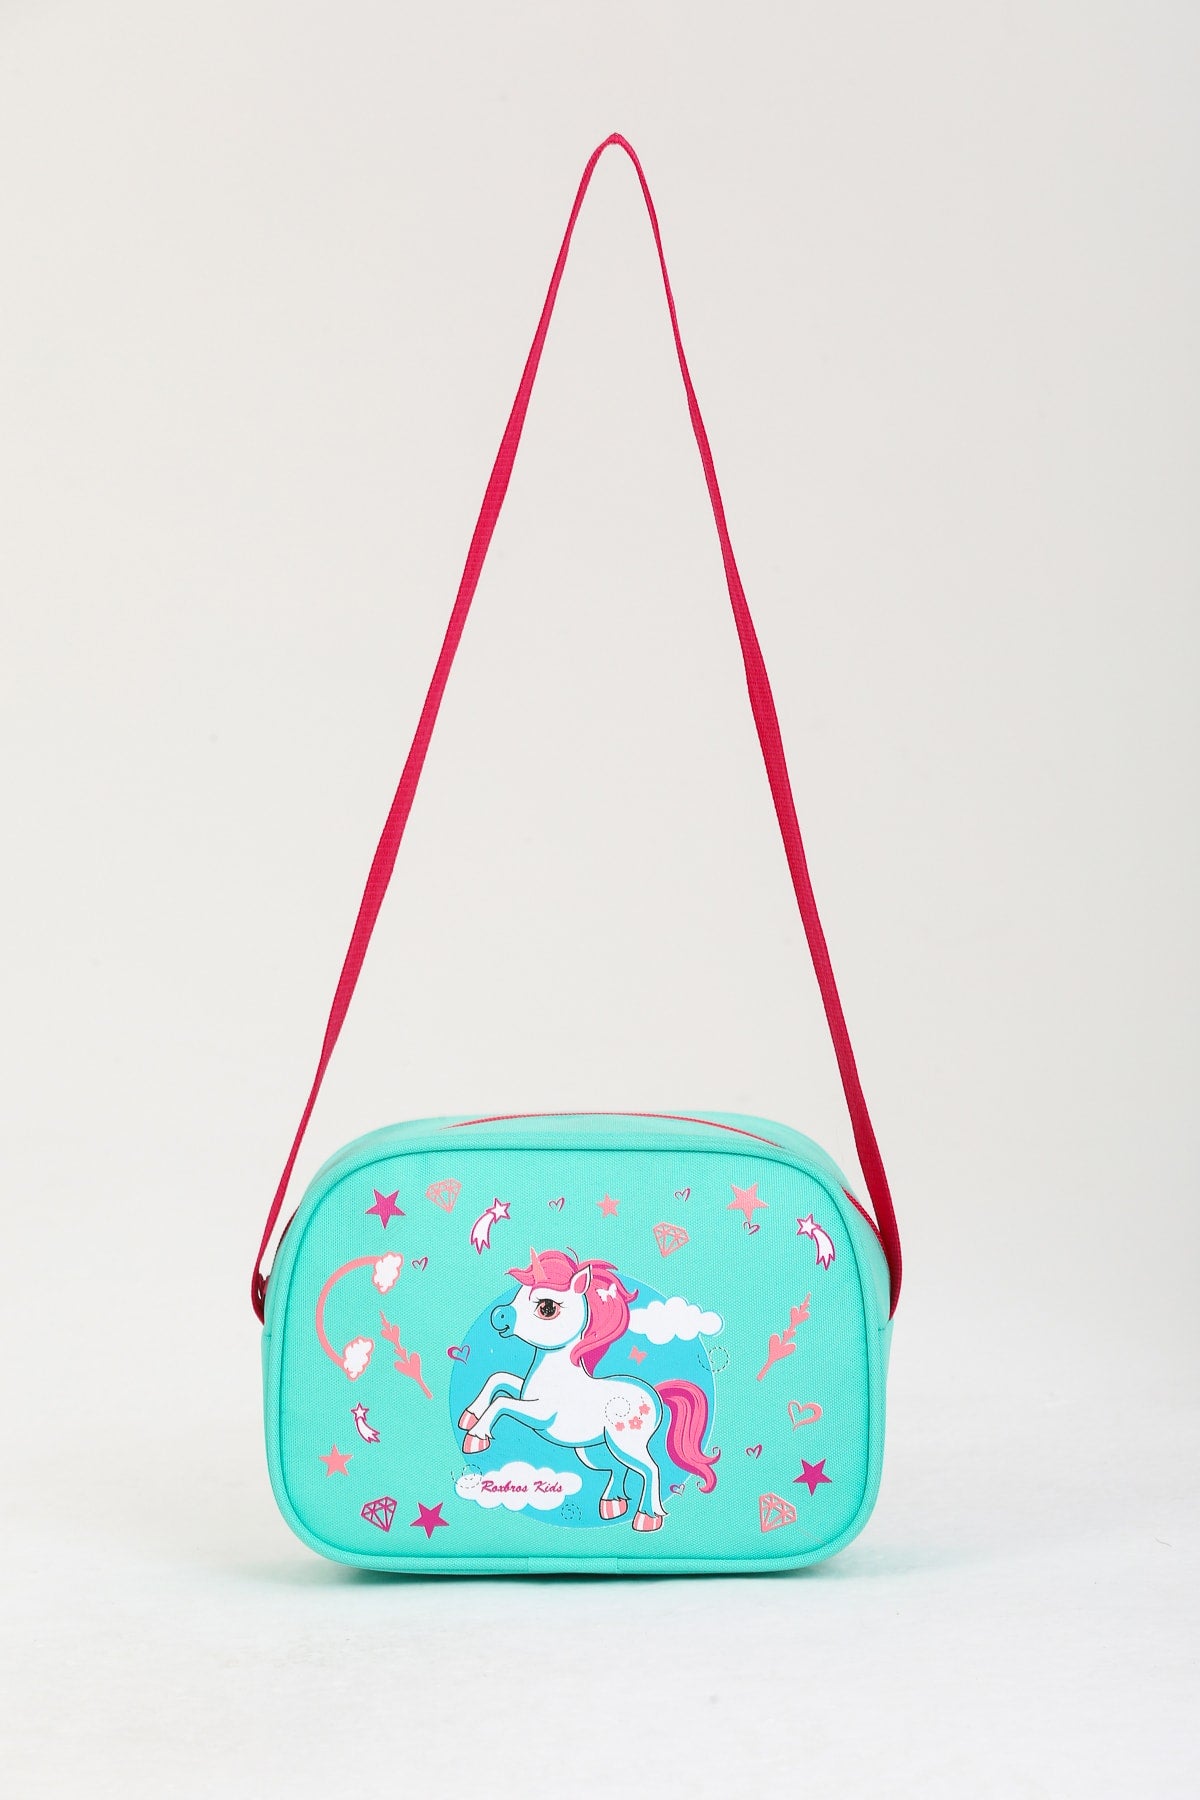 Unicorn Little Horse Primary School Bag Lunch Box Girl Child